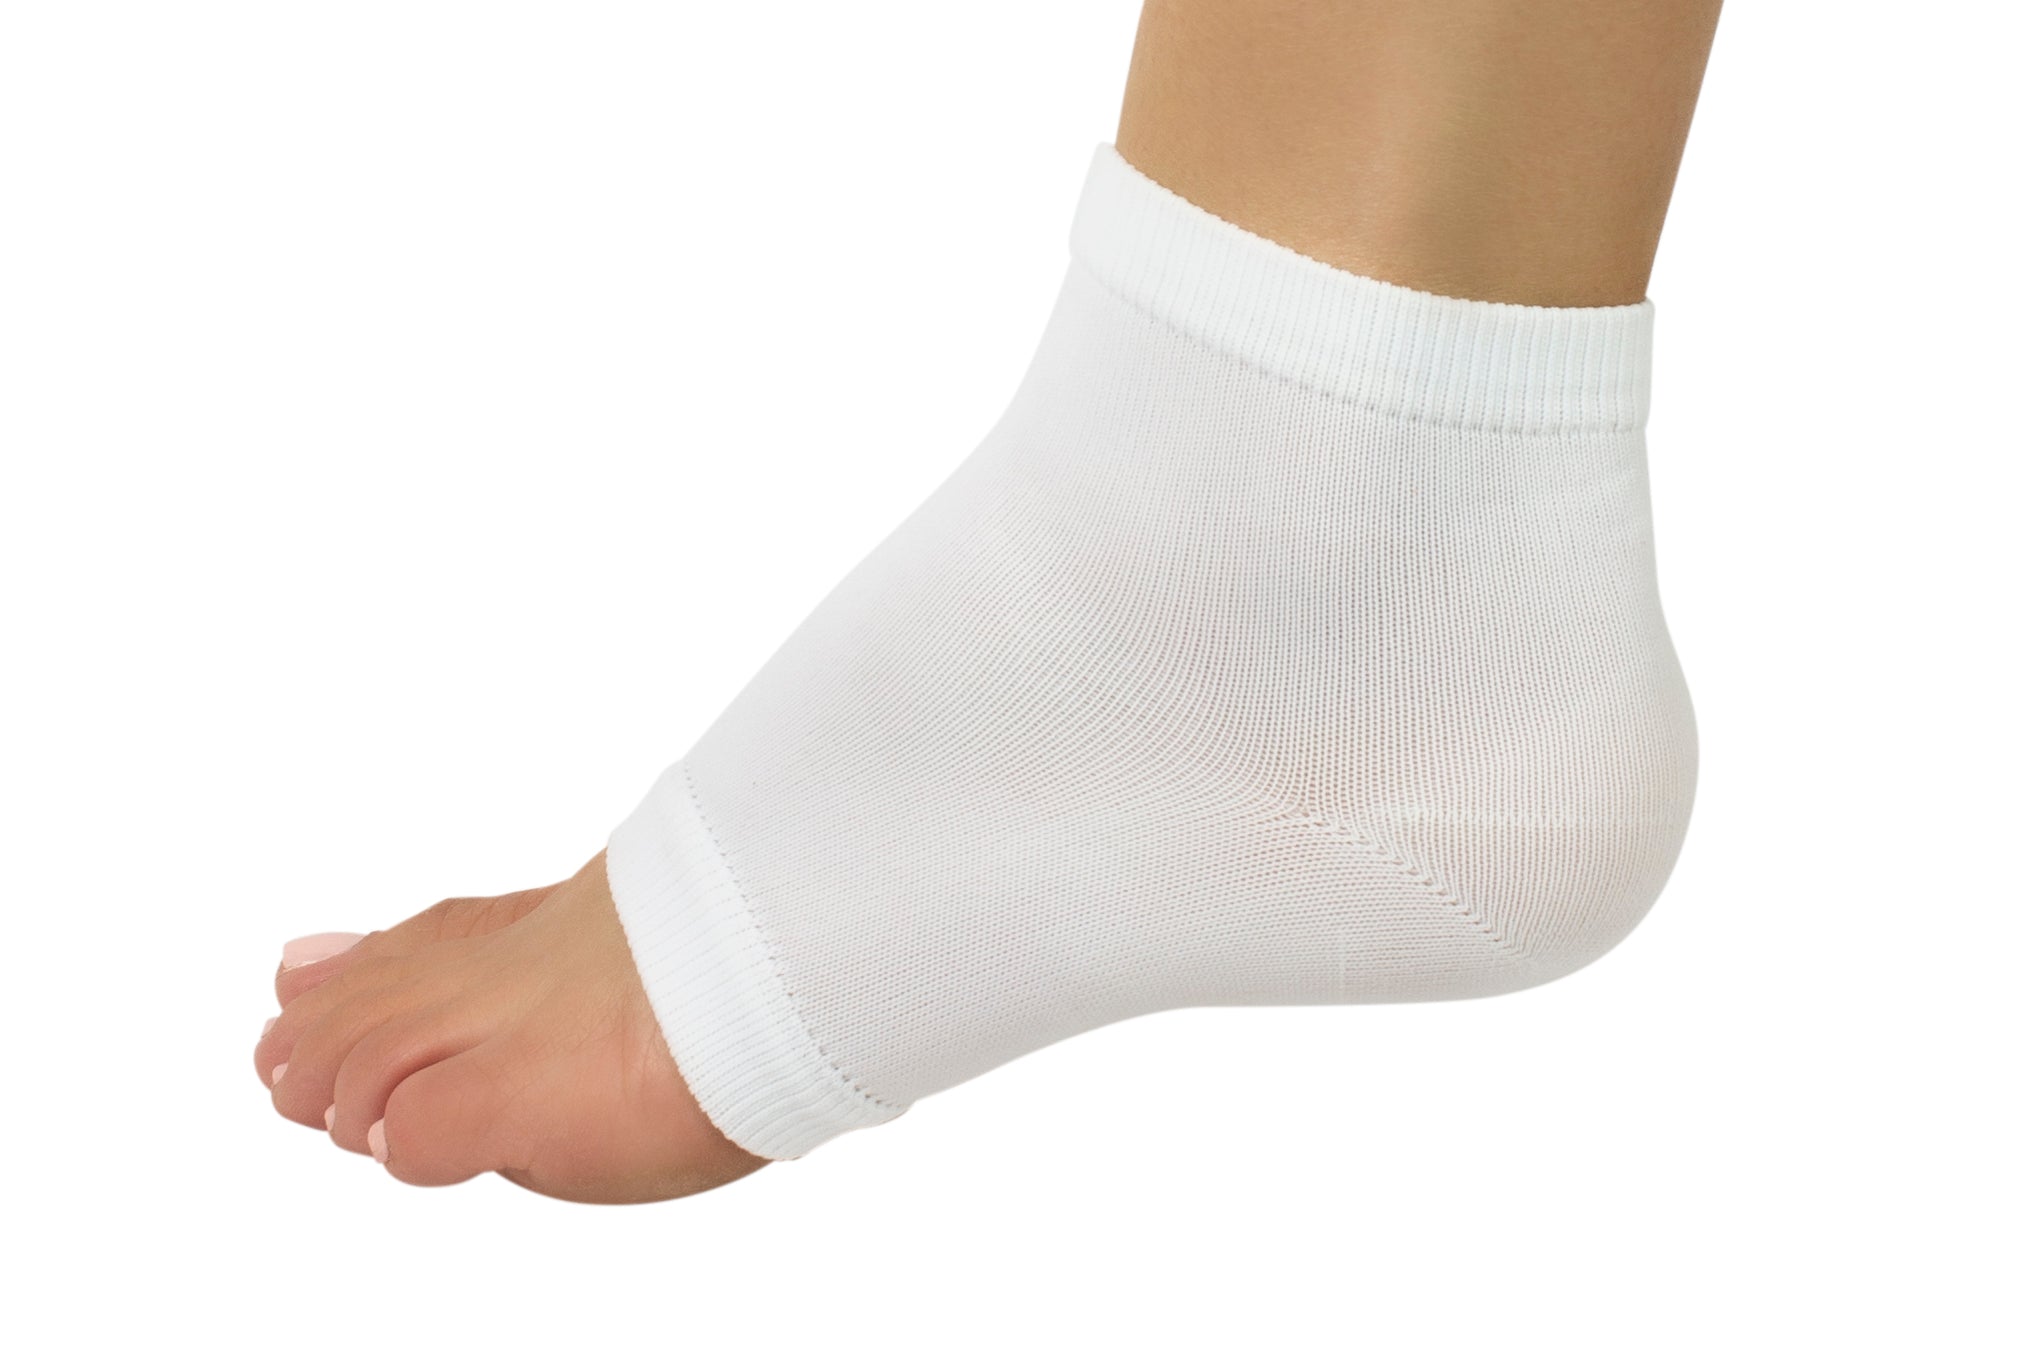 Soft Skin Sleeve Heel Gel side view in white on a foot